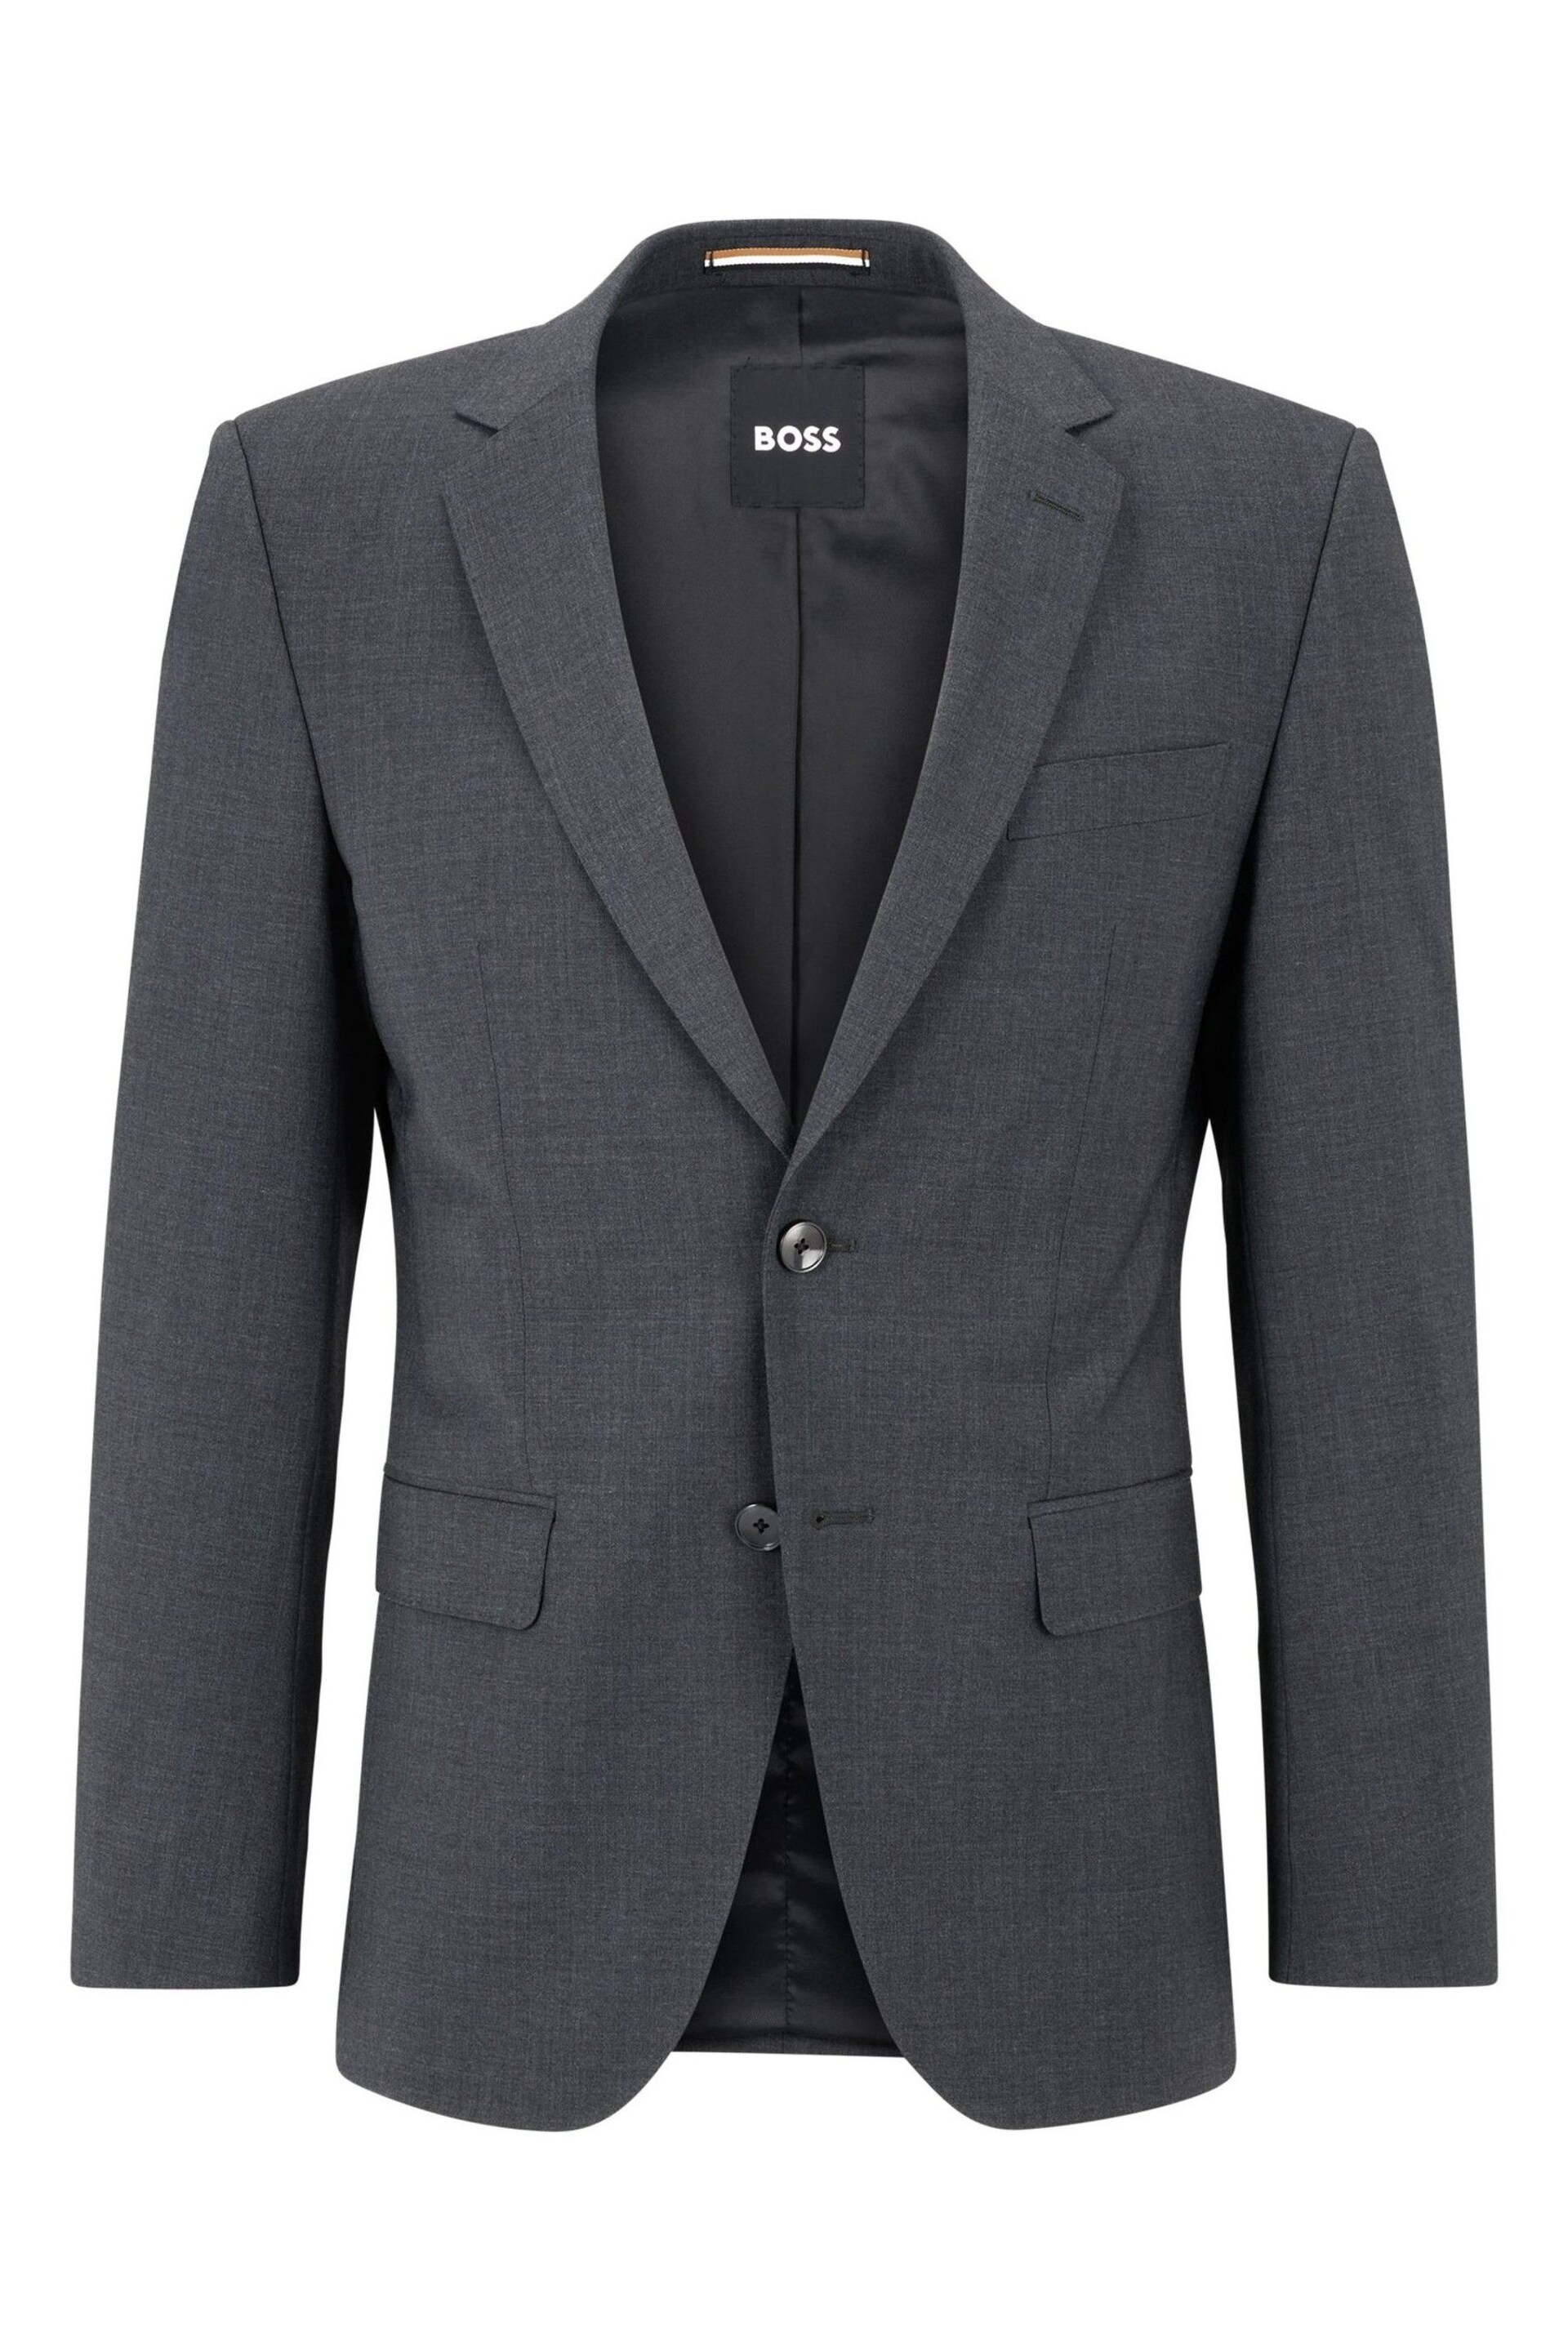 BOSS Grey Slim Fit Suit: Jacket - Image 5 of 7